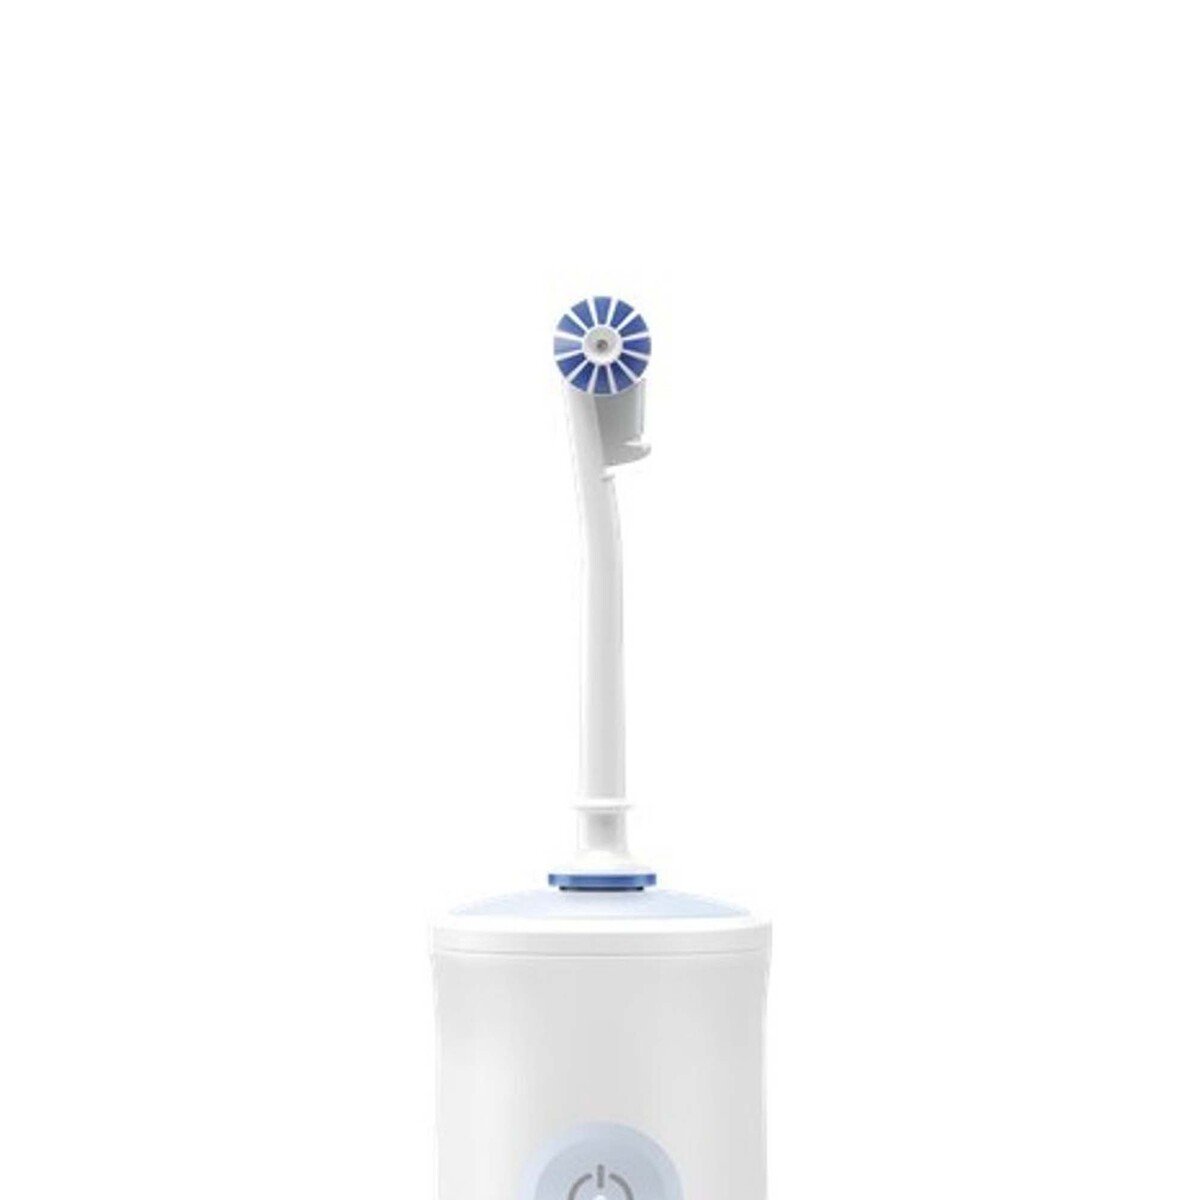 Oral-B WATERFLOSSER 4 Portable Irrigator Power Toothbrush MDH20.016.2